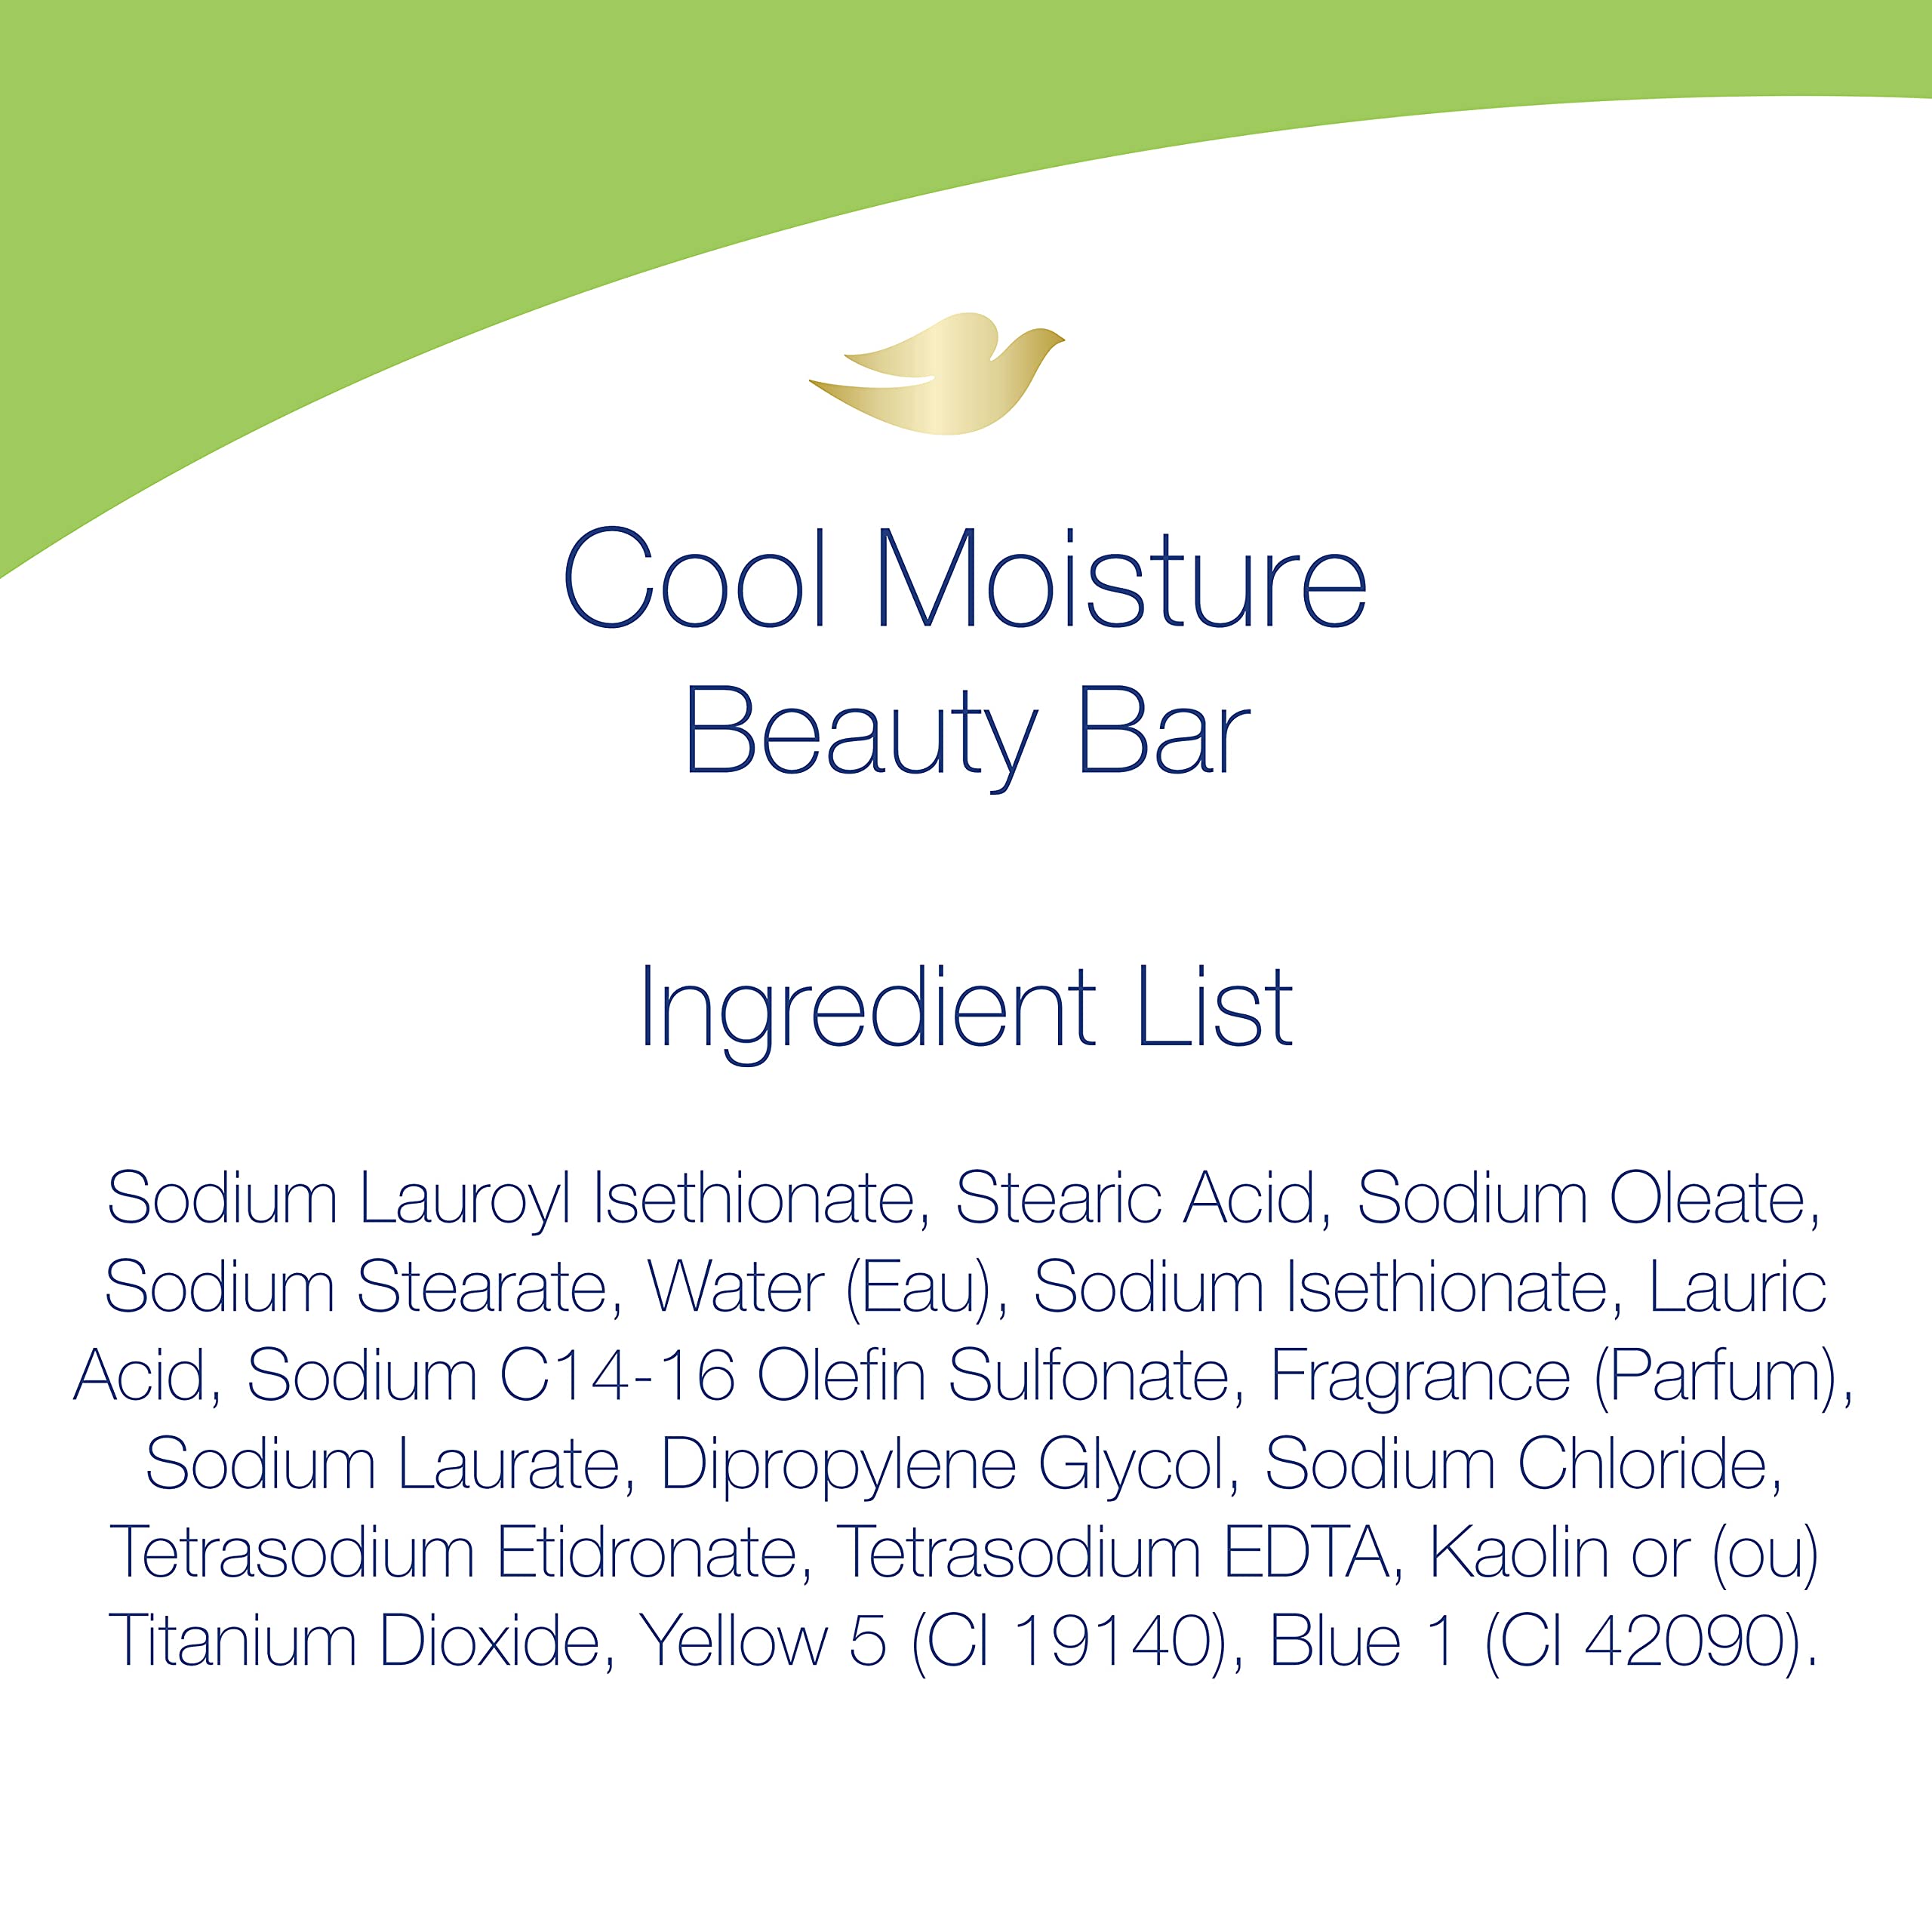 Dove Skin Care Beauty Bar For Softer Skin Cucumber and Green Tea More Moisturizing Than Bar Soap 3.75 oz, 14 Bars